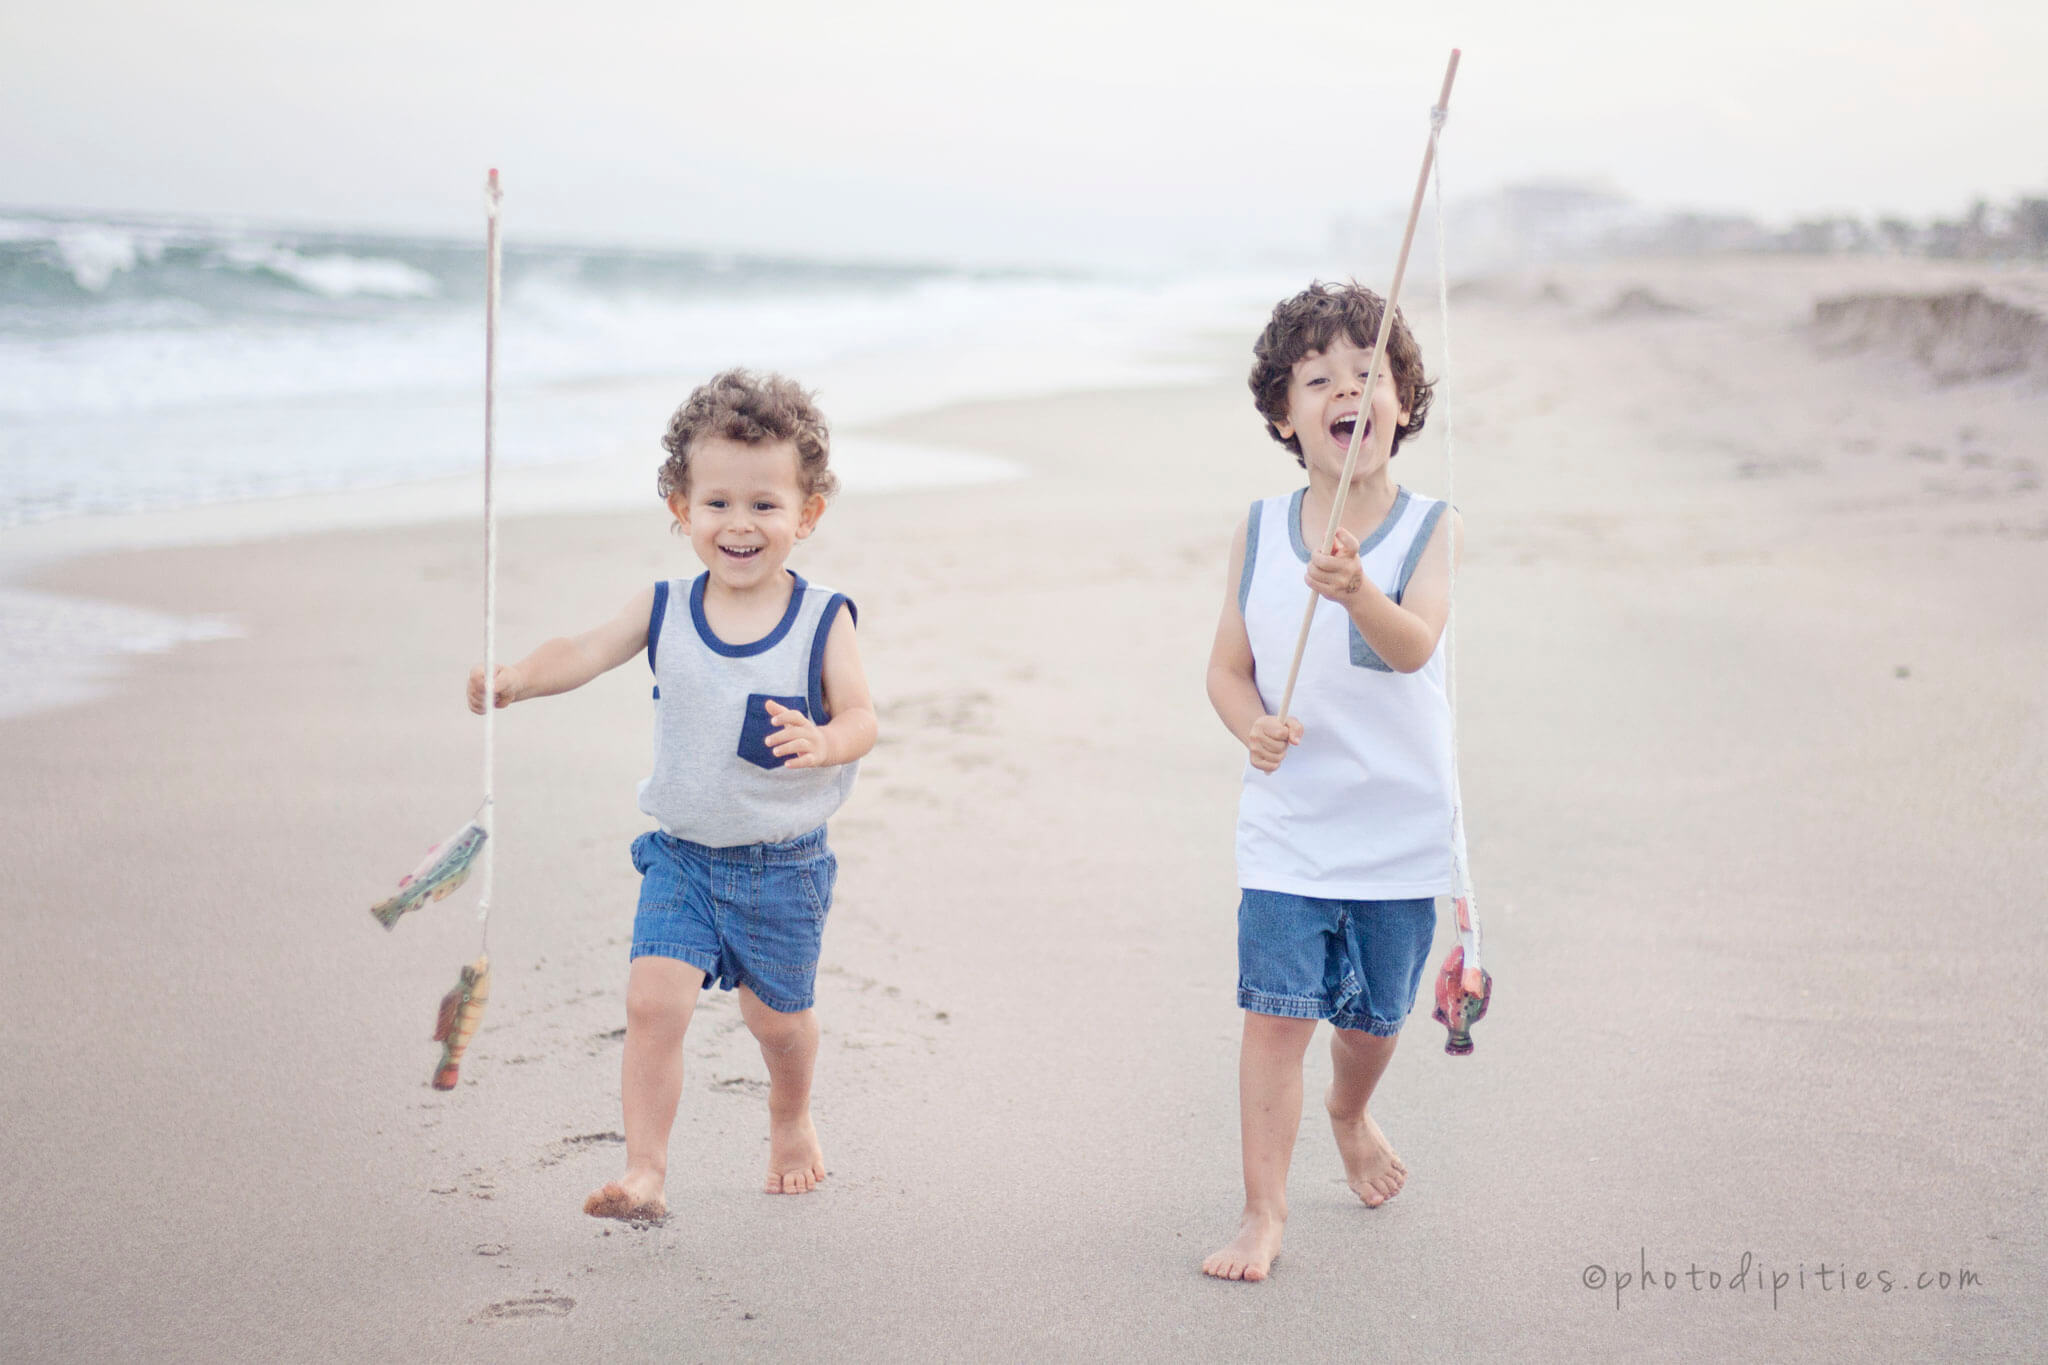 Photodipities Family | Children Photography